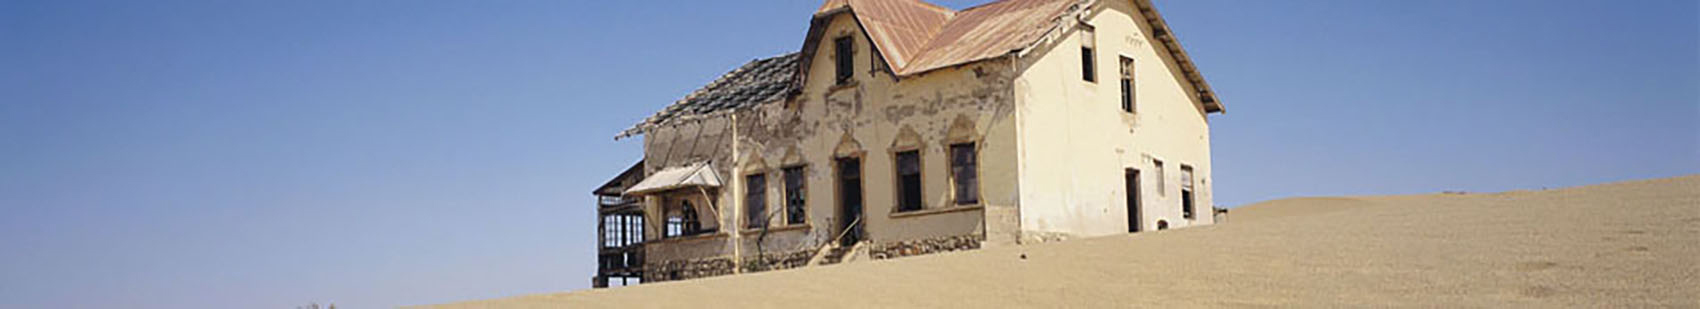 Kolmanskop*